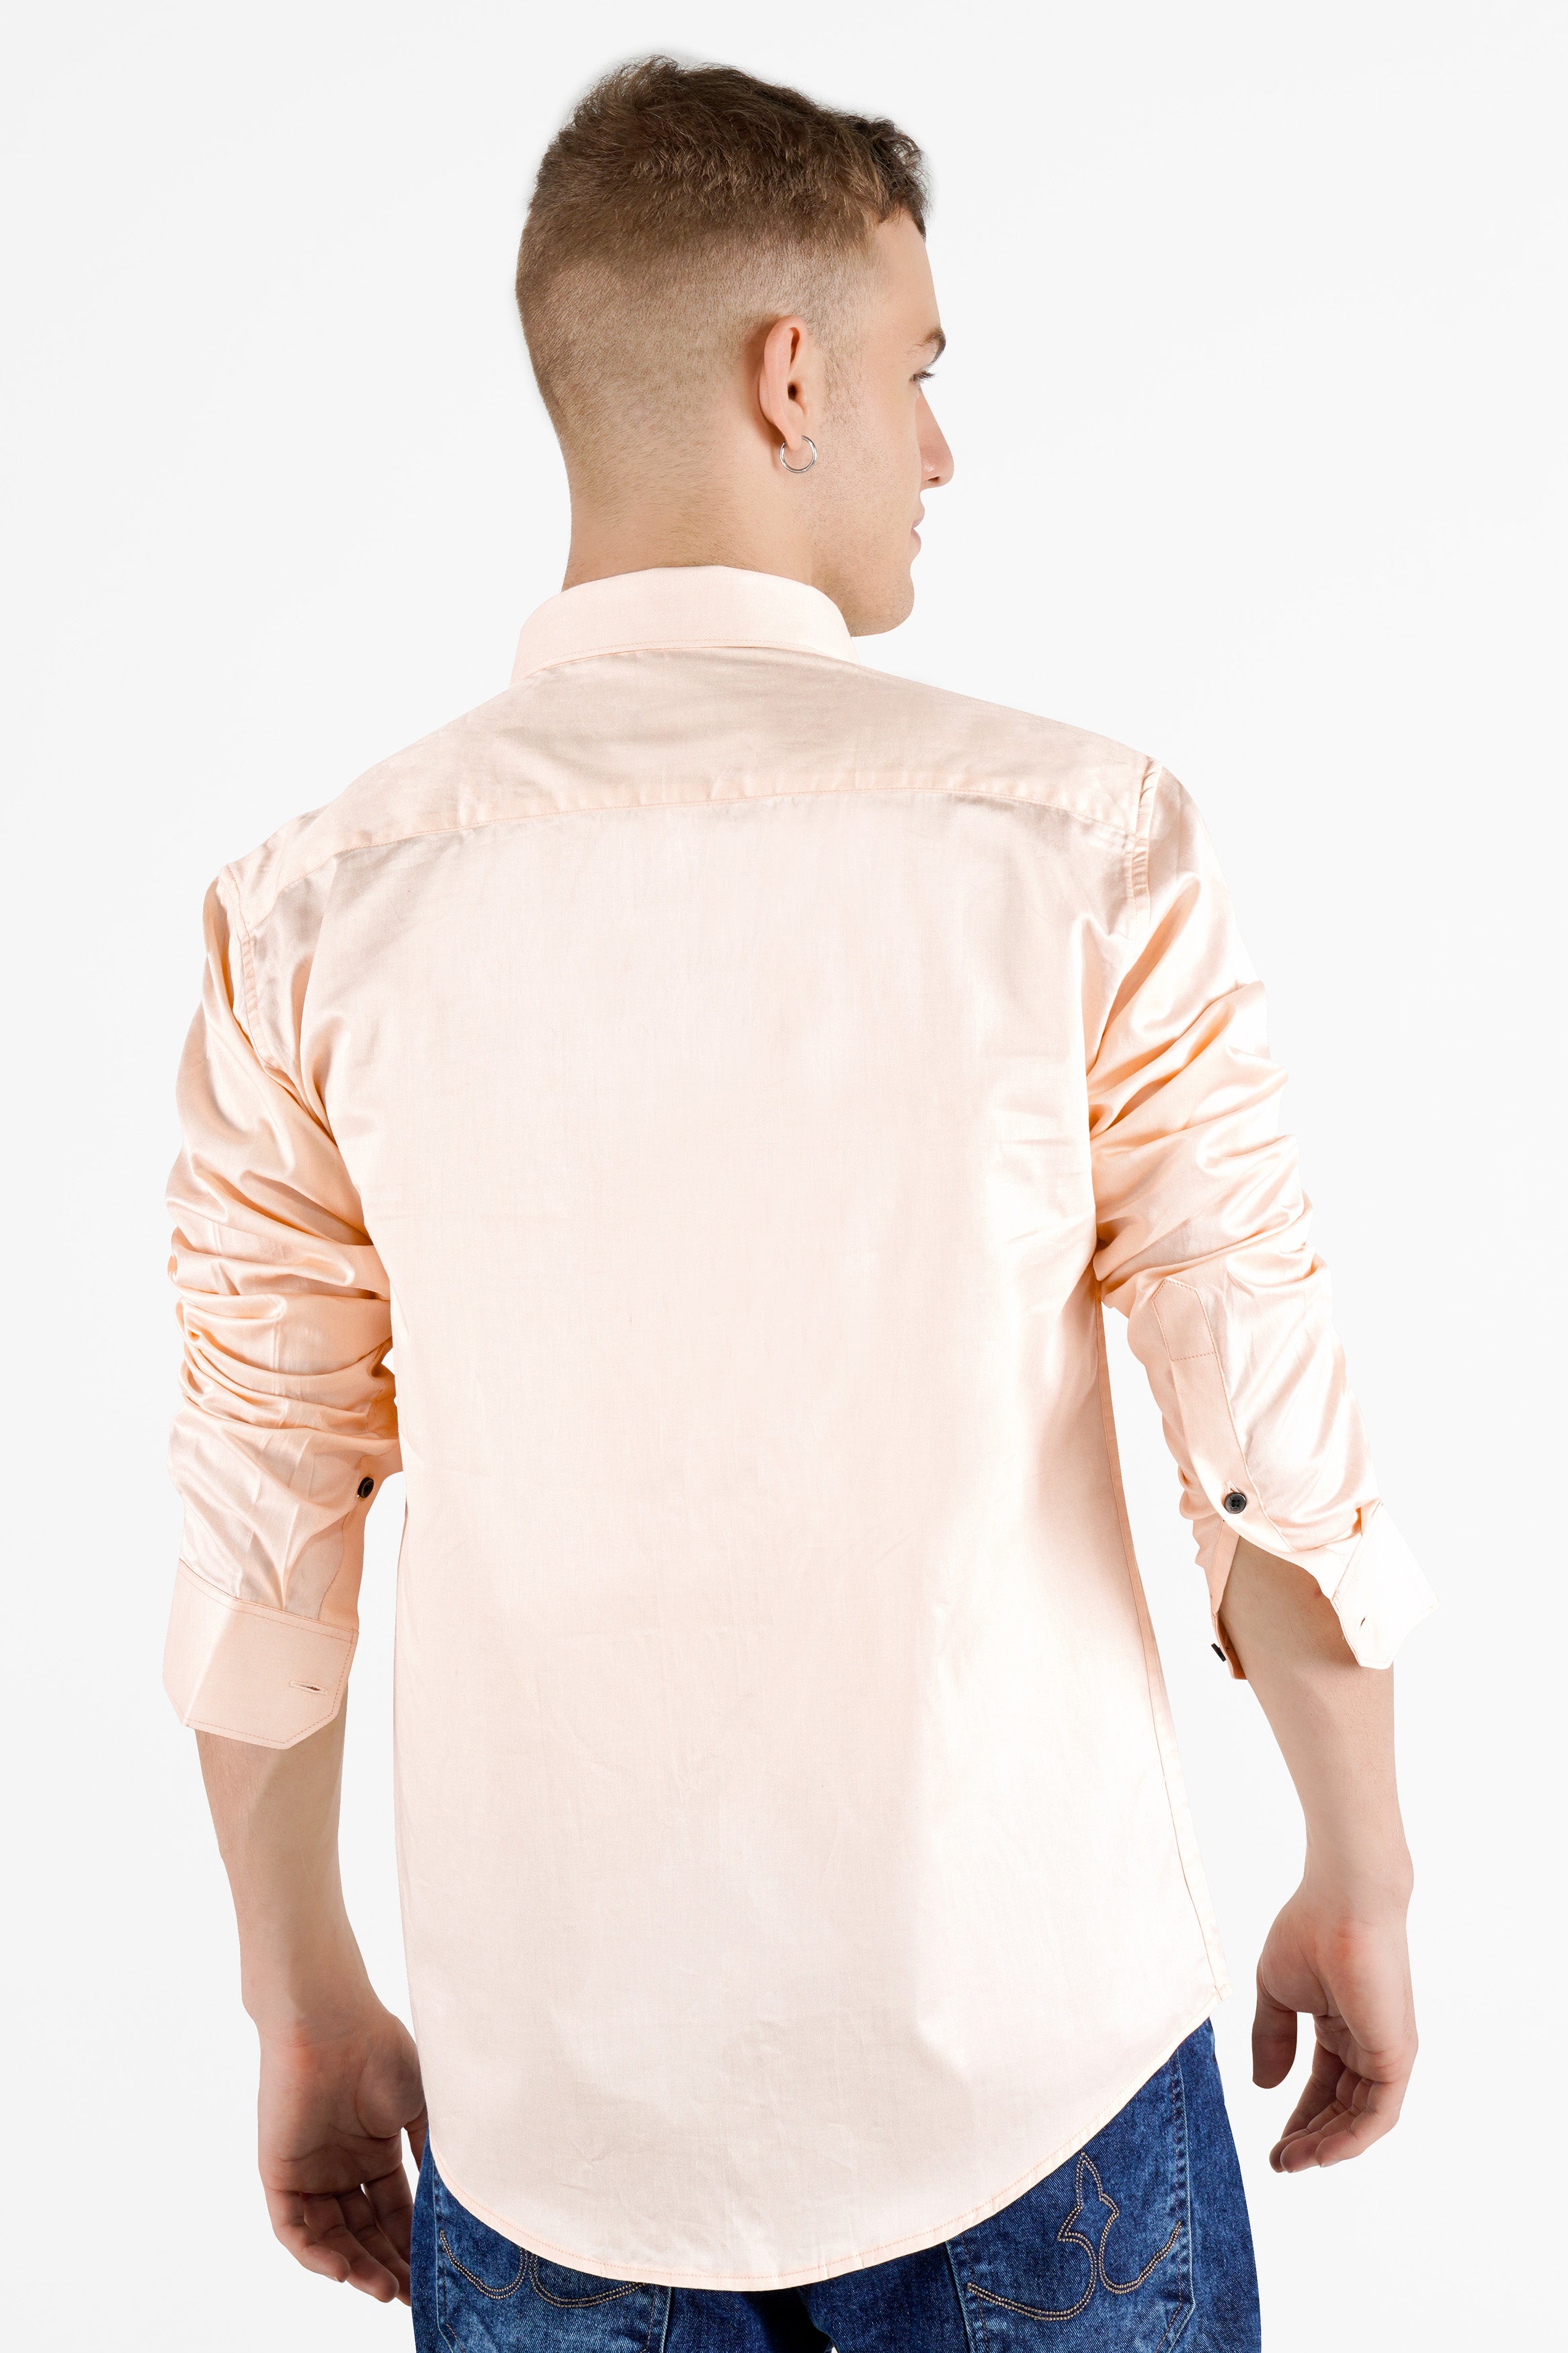 Gainsboro Peach Subtle Sheen Super Soft Premium Cotton Shirt